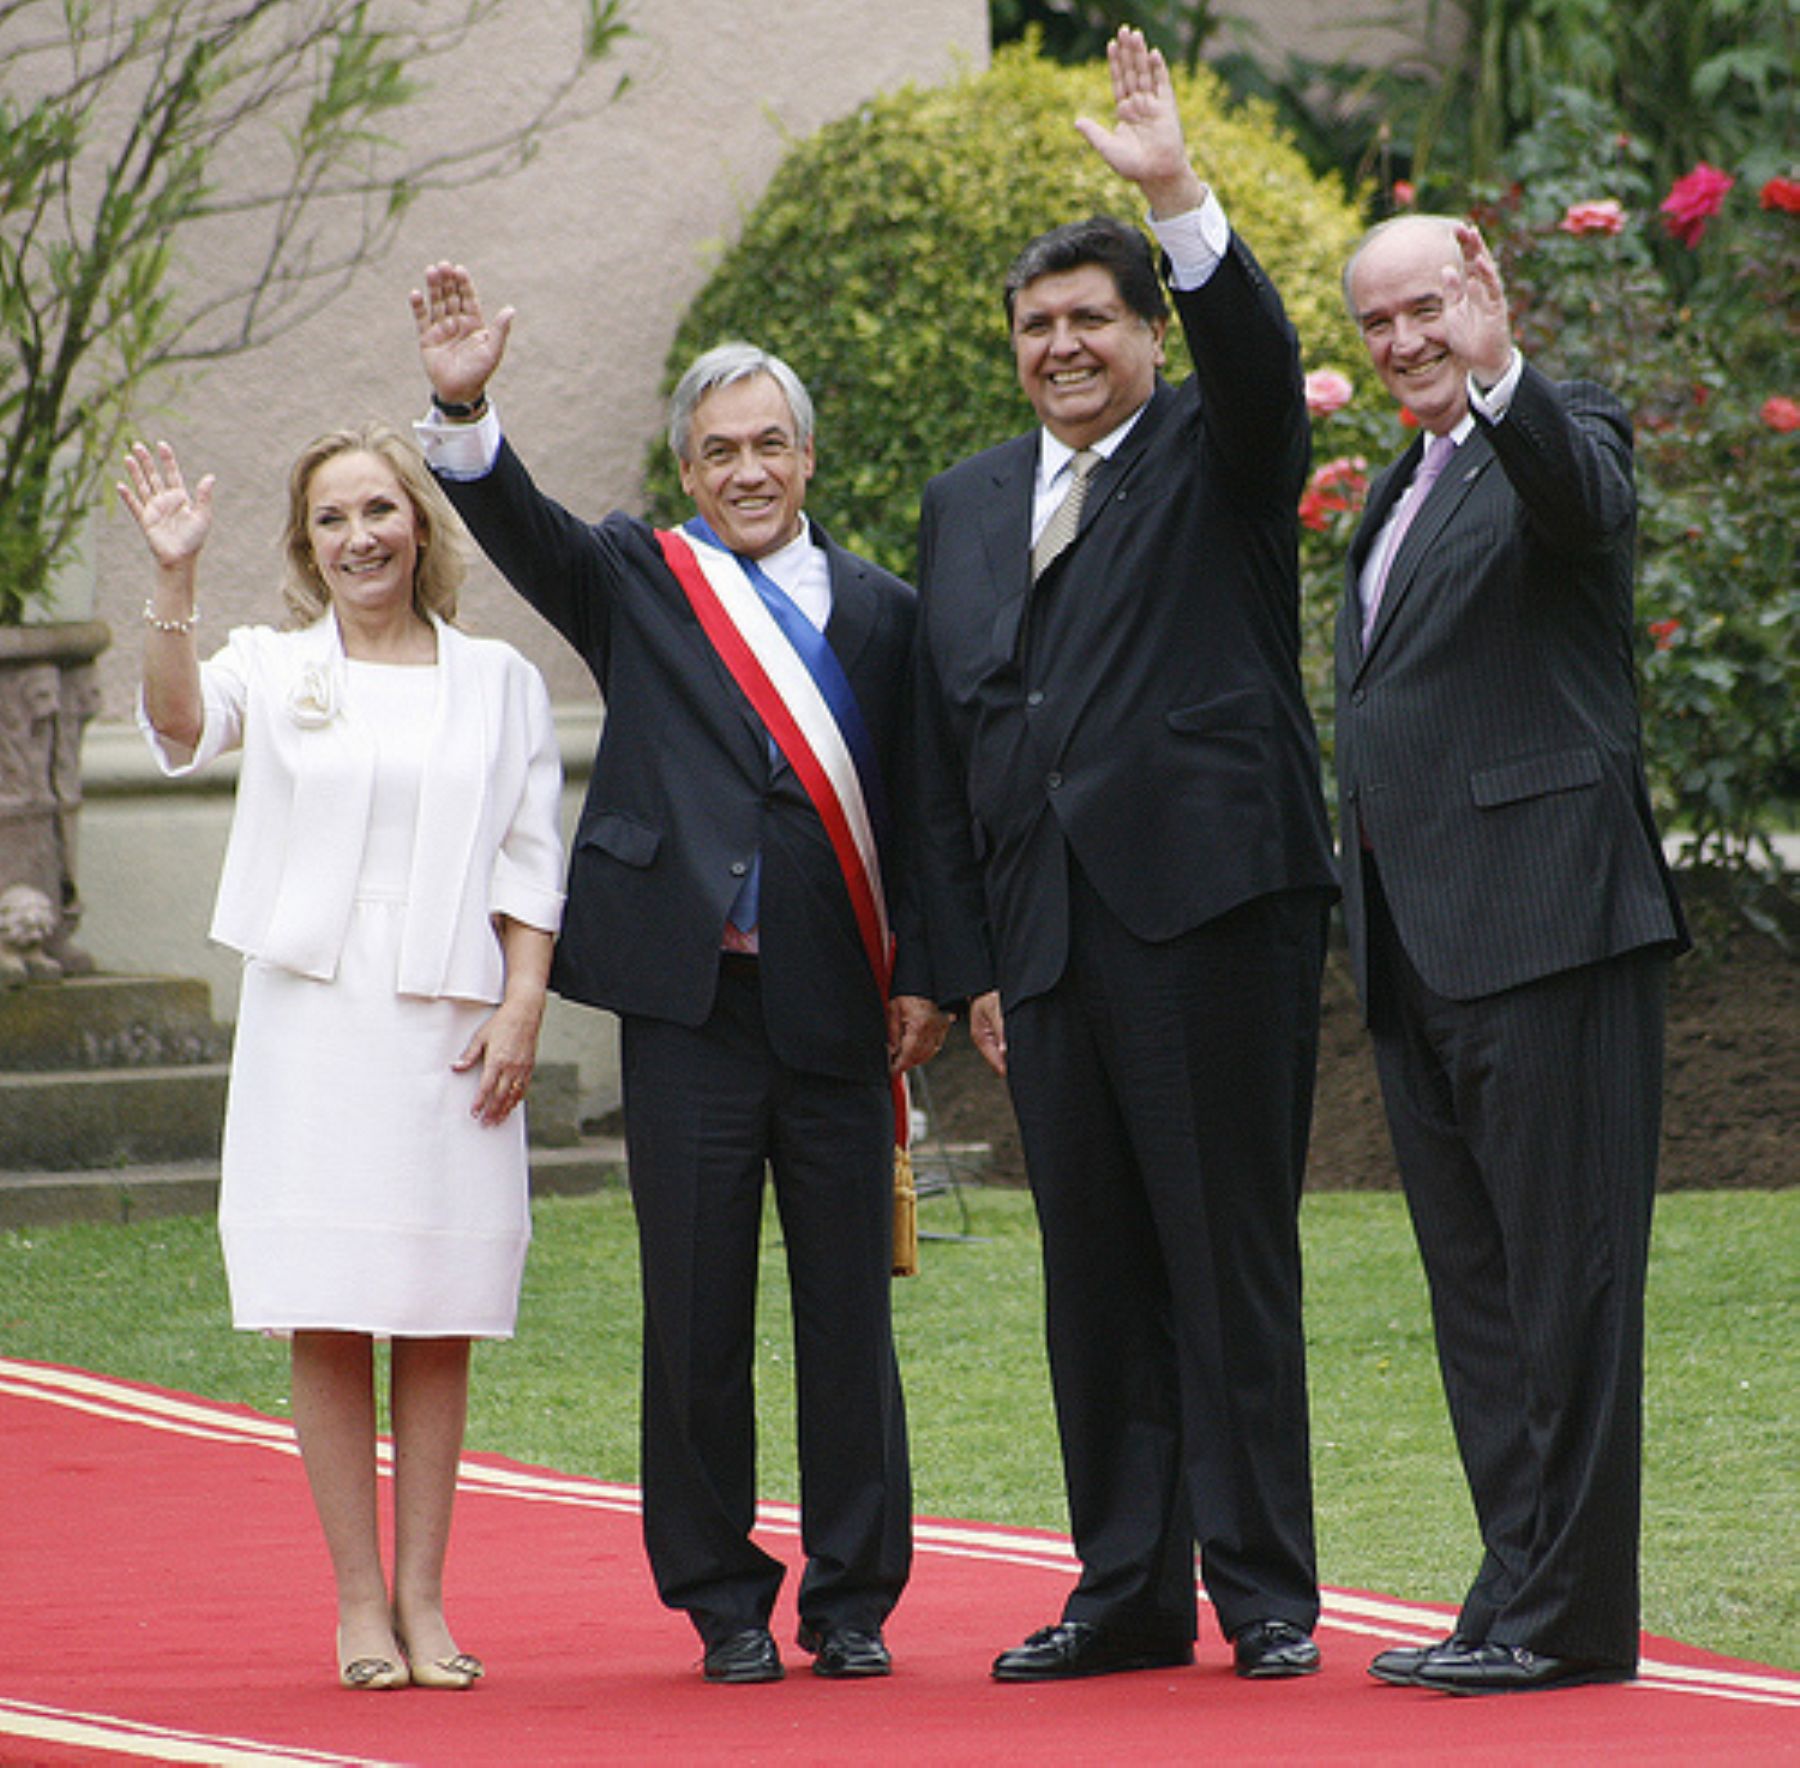 Presidente Alan García expresa saludo cordial a su homólogo chileno Sebastián Piñera. Foto: Presidencia de Chile.